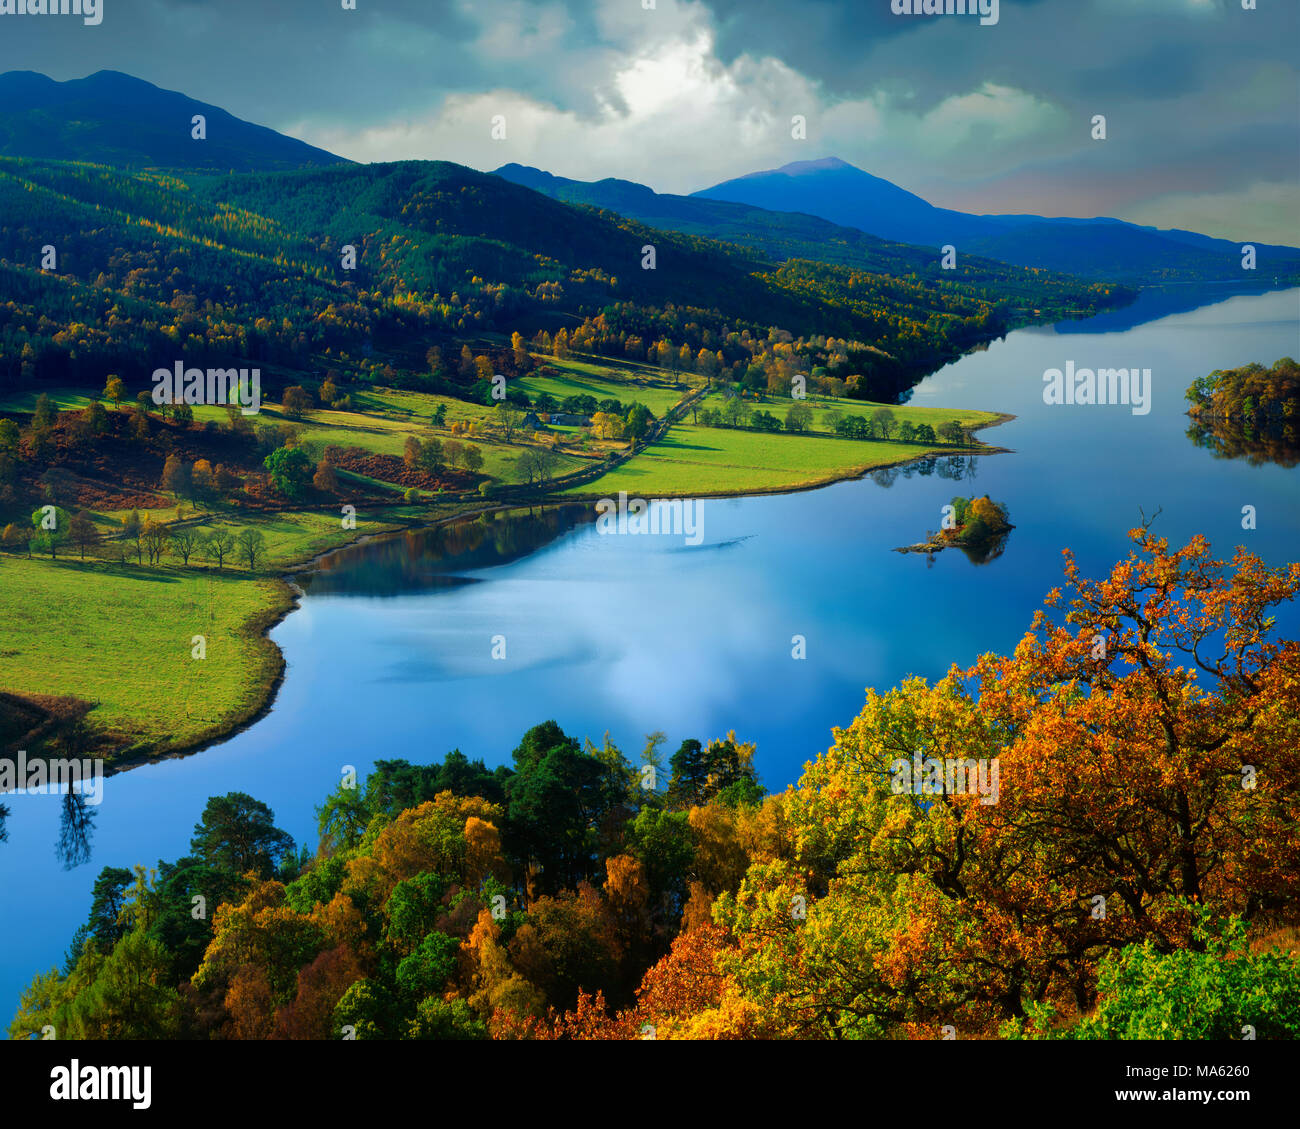 GB - Escocia: Loch Tummel de Queen's View en Tayside Foto de stock